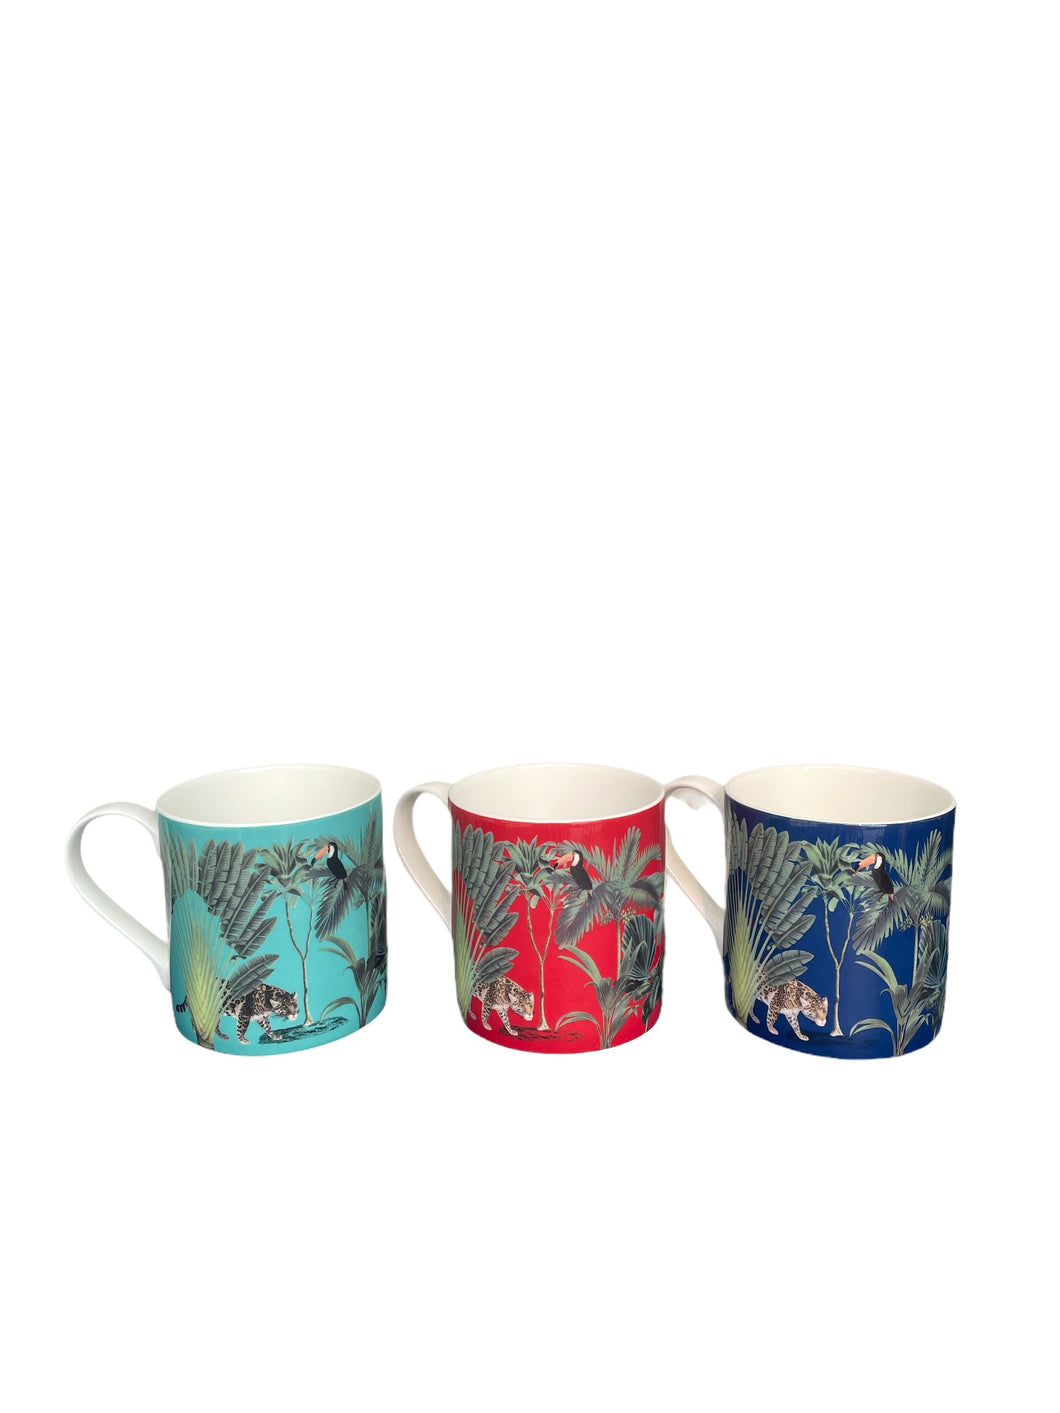 Wholesale Darwin's Menagerie Mug Set (Six 350ml Mugs) - Mustard and Gray Trade Homeware and Gifts - Made in Britain